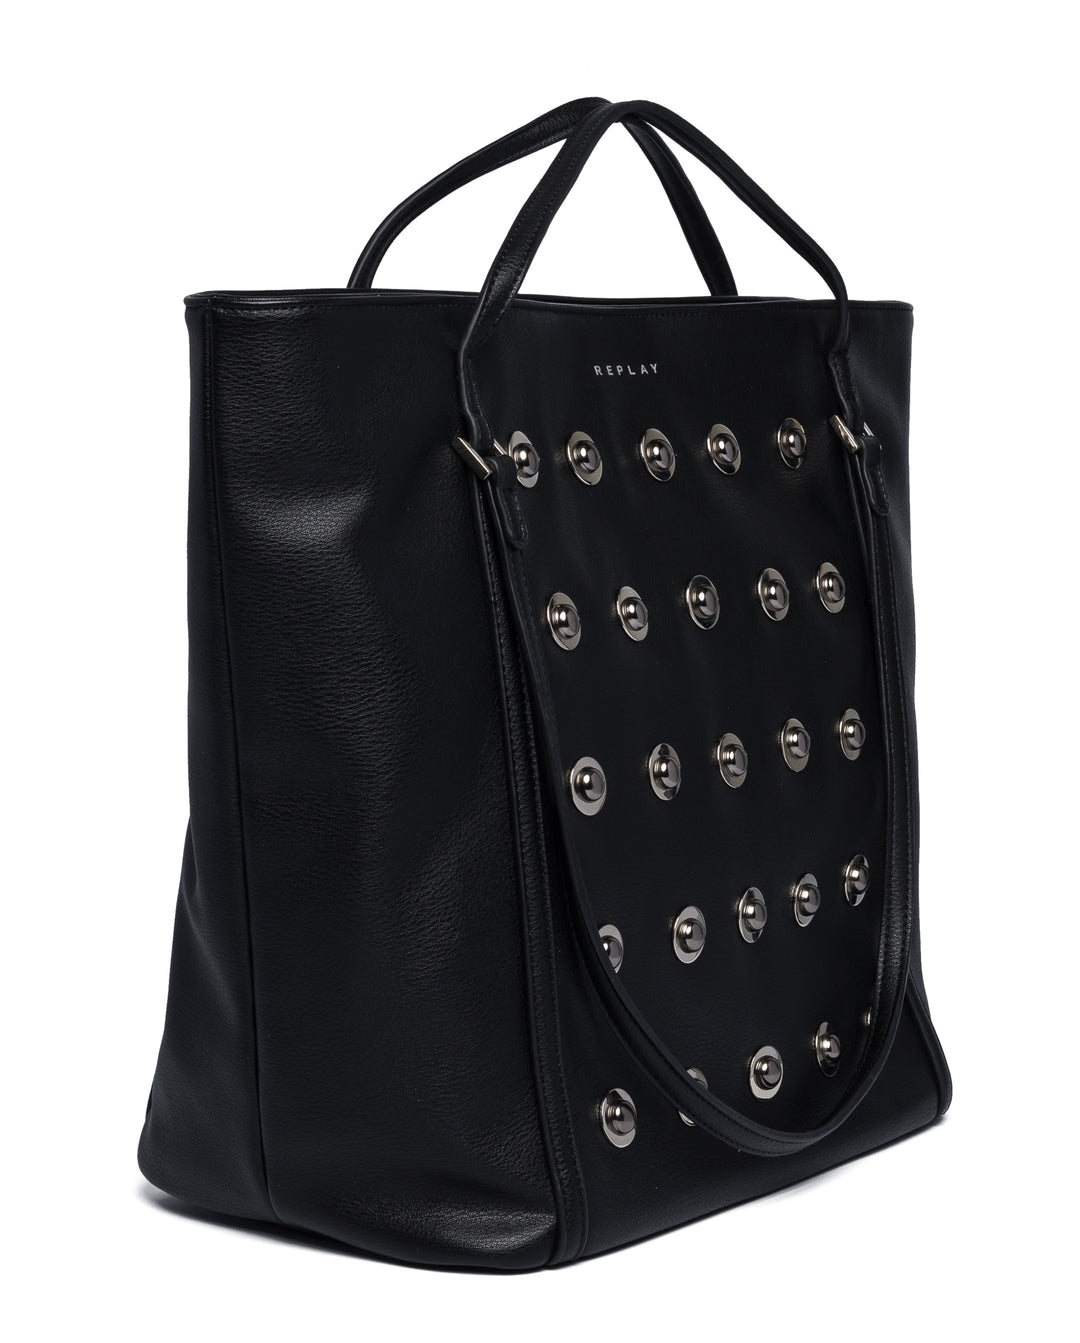 Replay Womens Shoulder Bag In Black